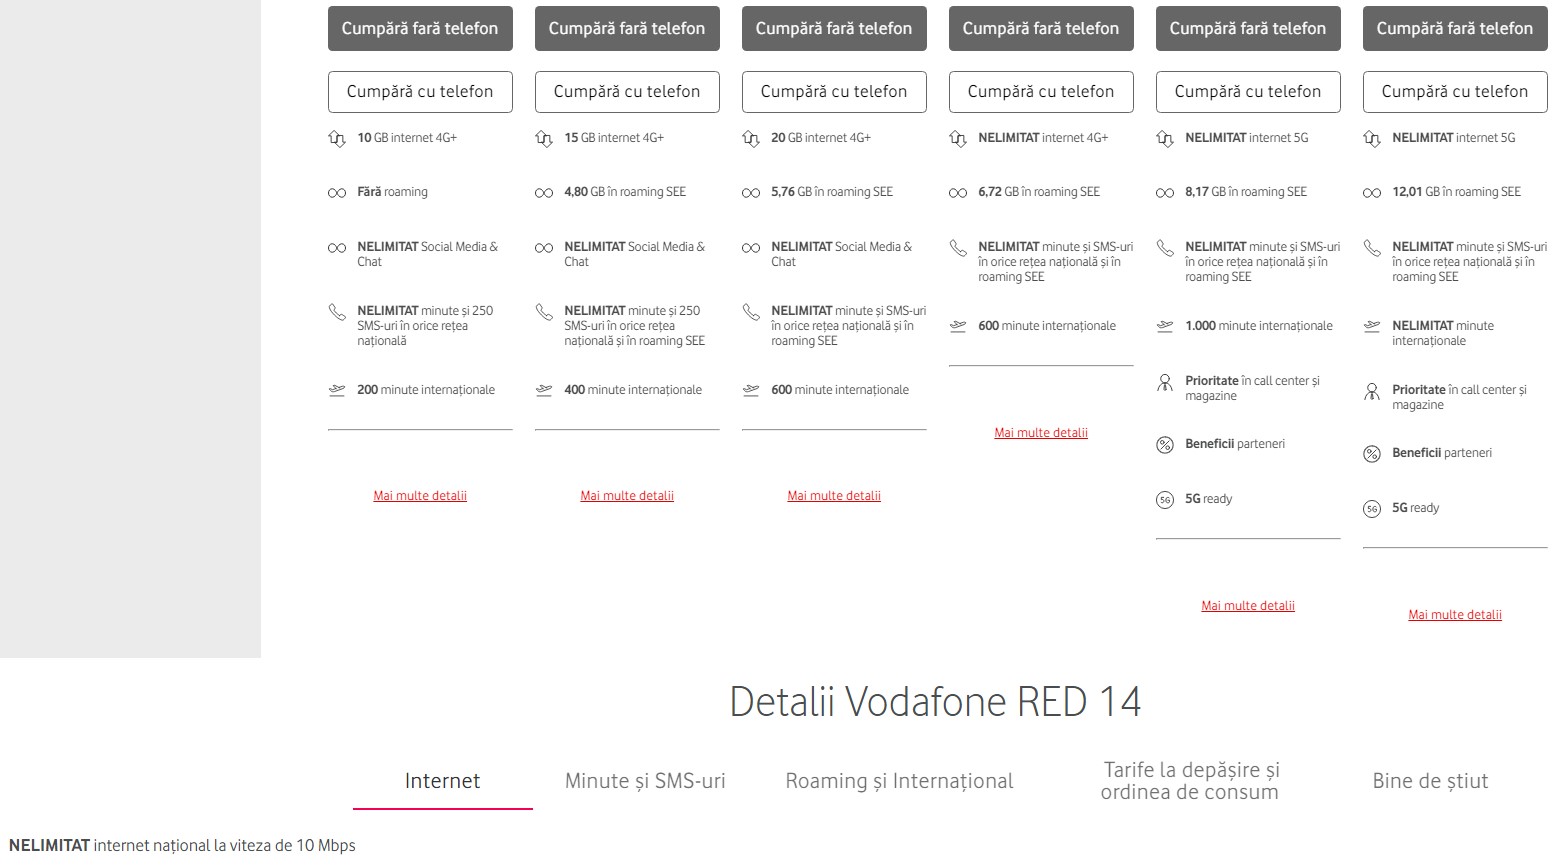 Vodafone limita internet ilimitado